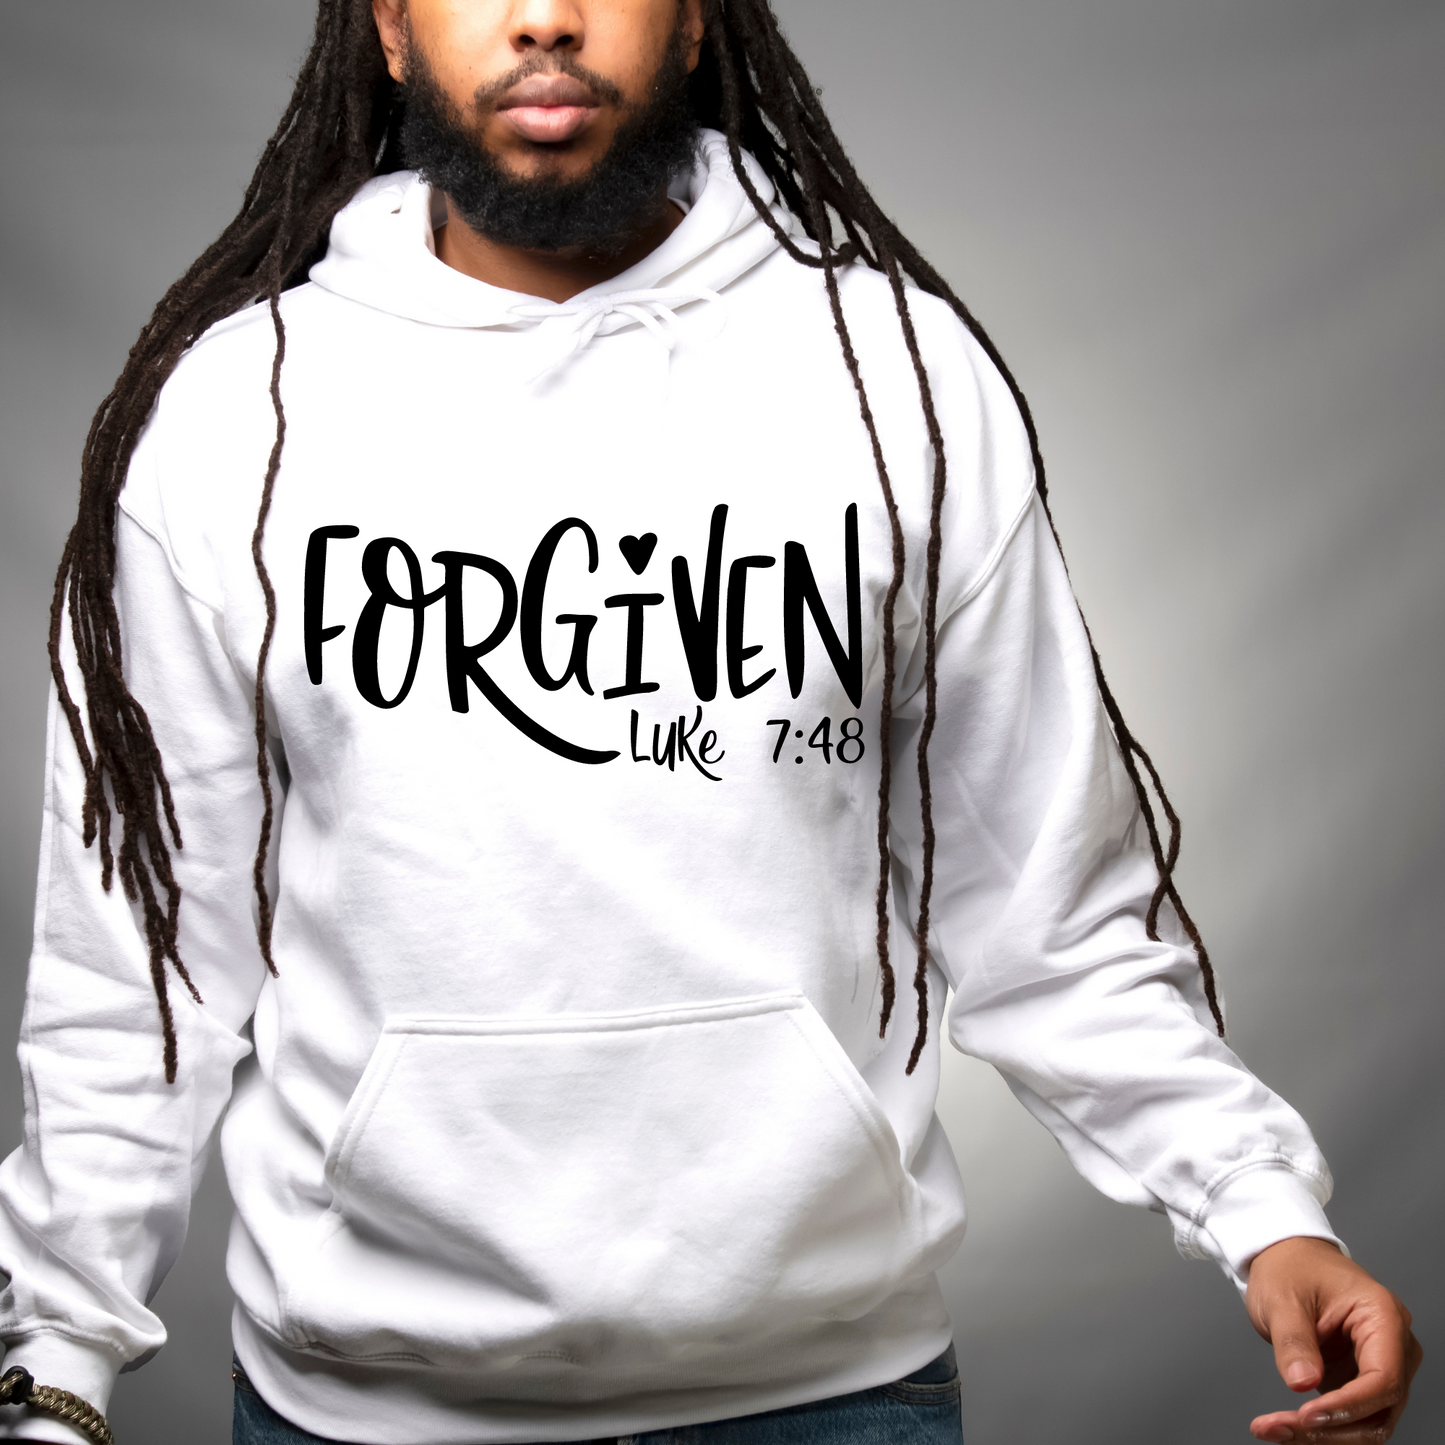 Forgiven "Luke 7:48" Hoodie